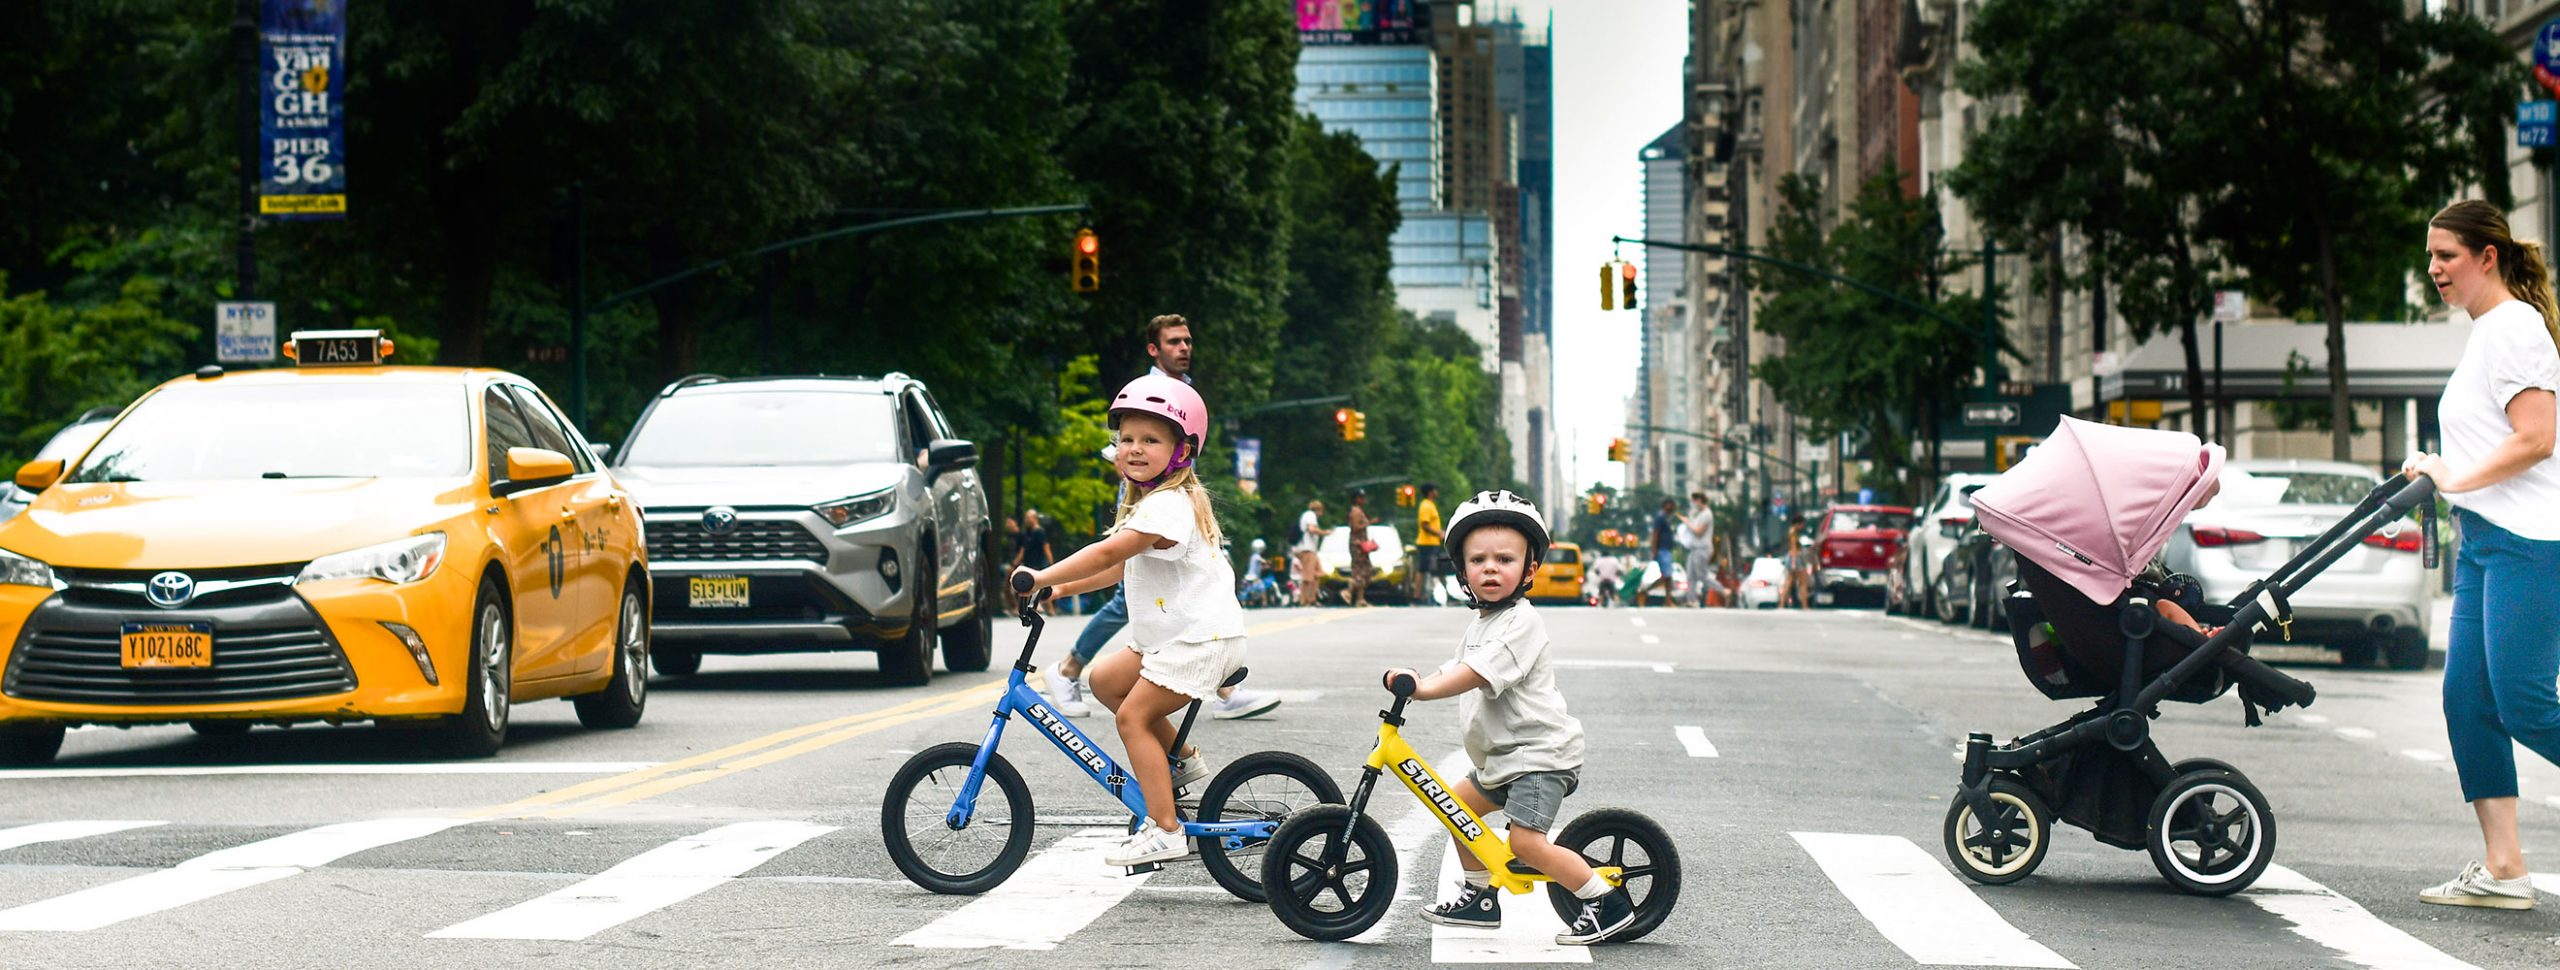 Children ride their Strider Bikes across a busy street in New York